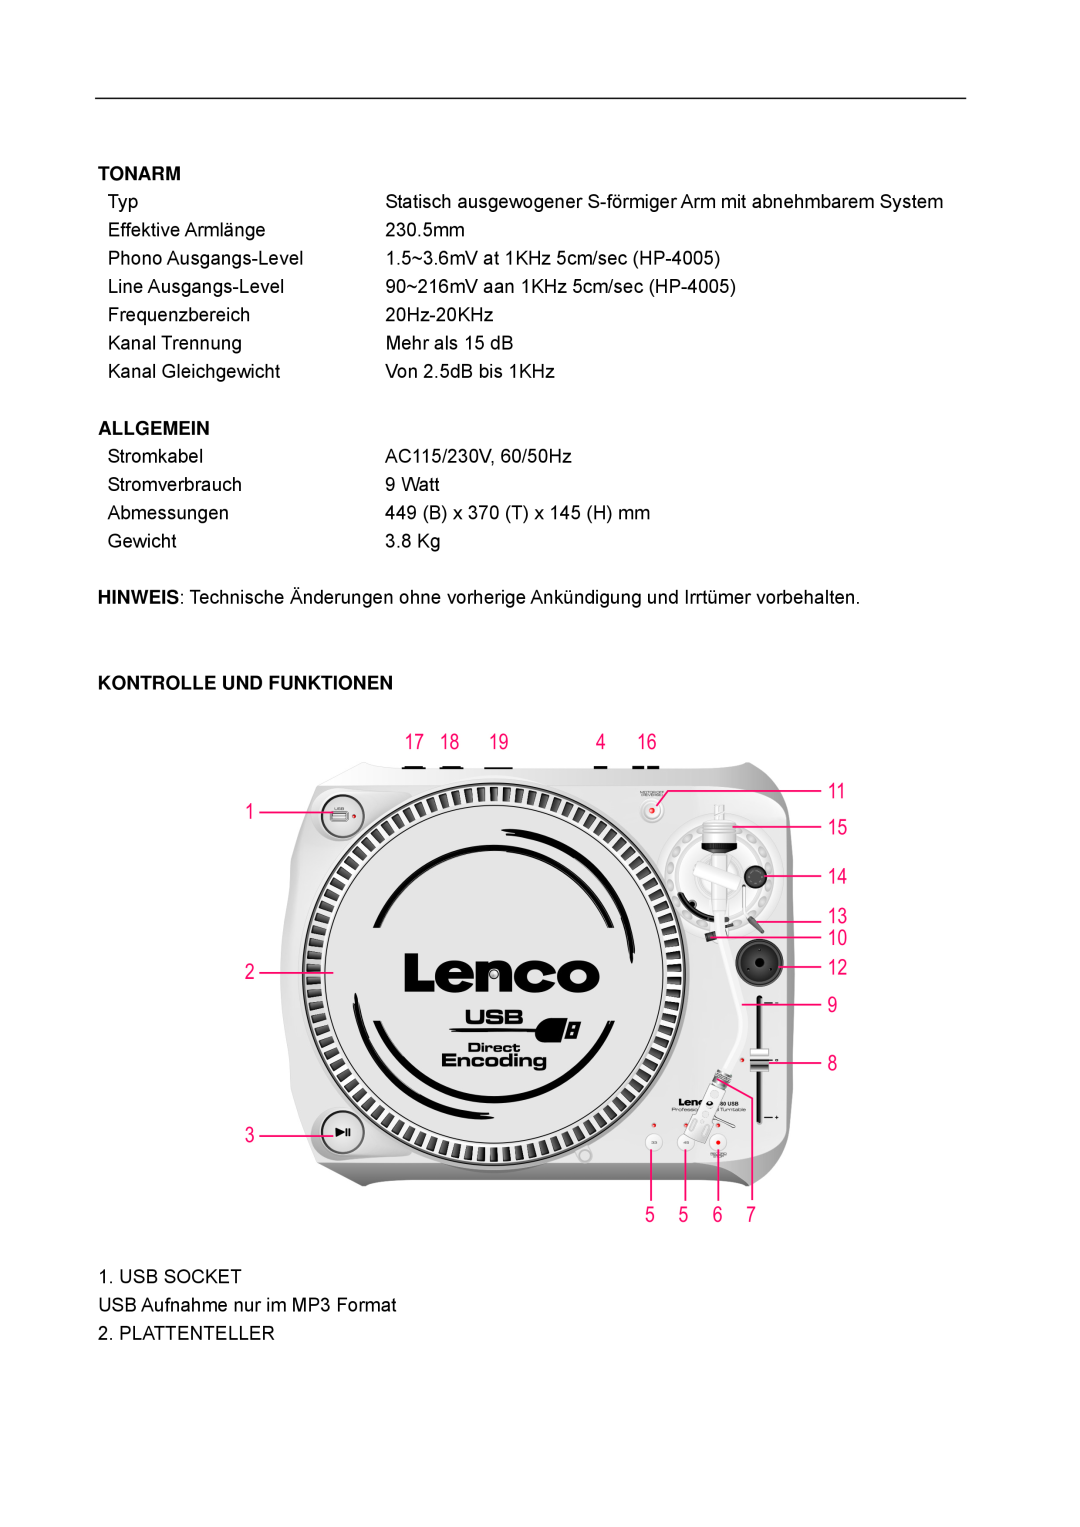 Lenco Marine L-80 USB user manual Tonarm, Allgemein, Kontrolle Und Funktionen 